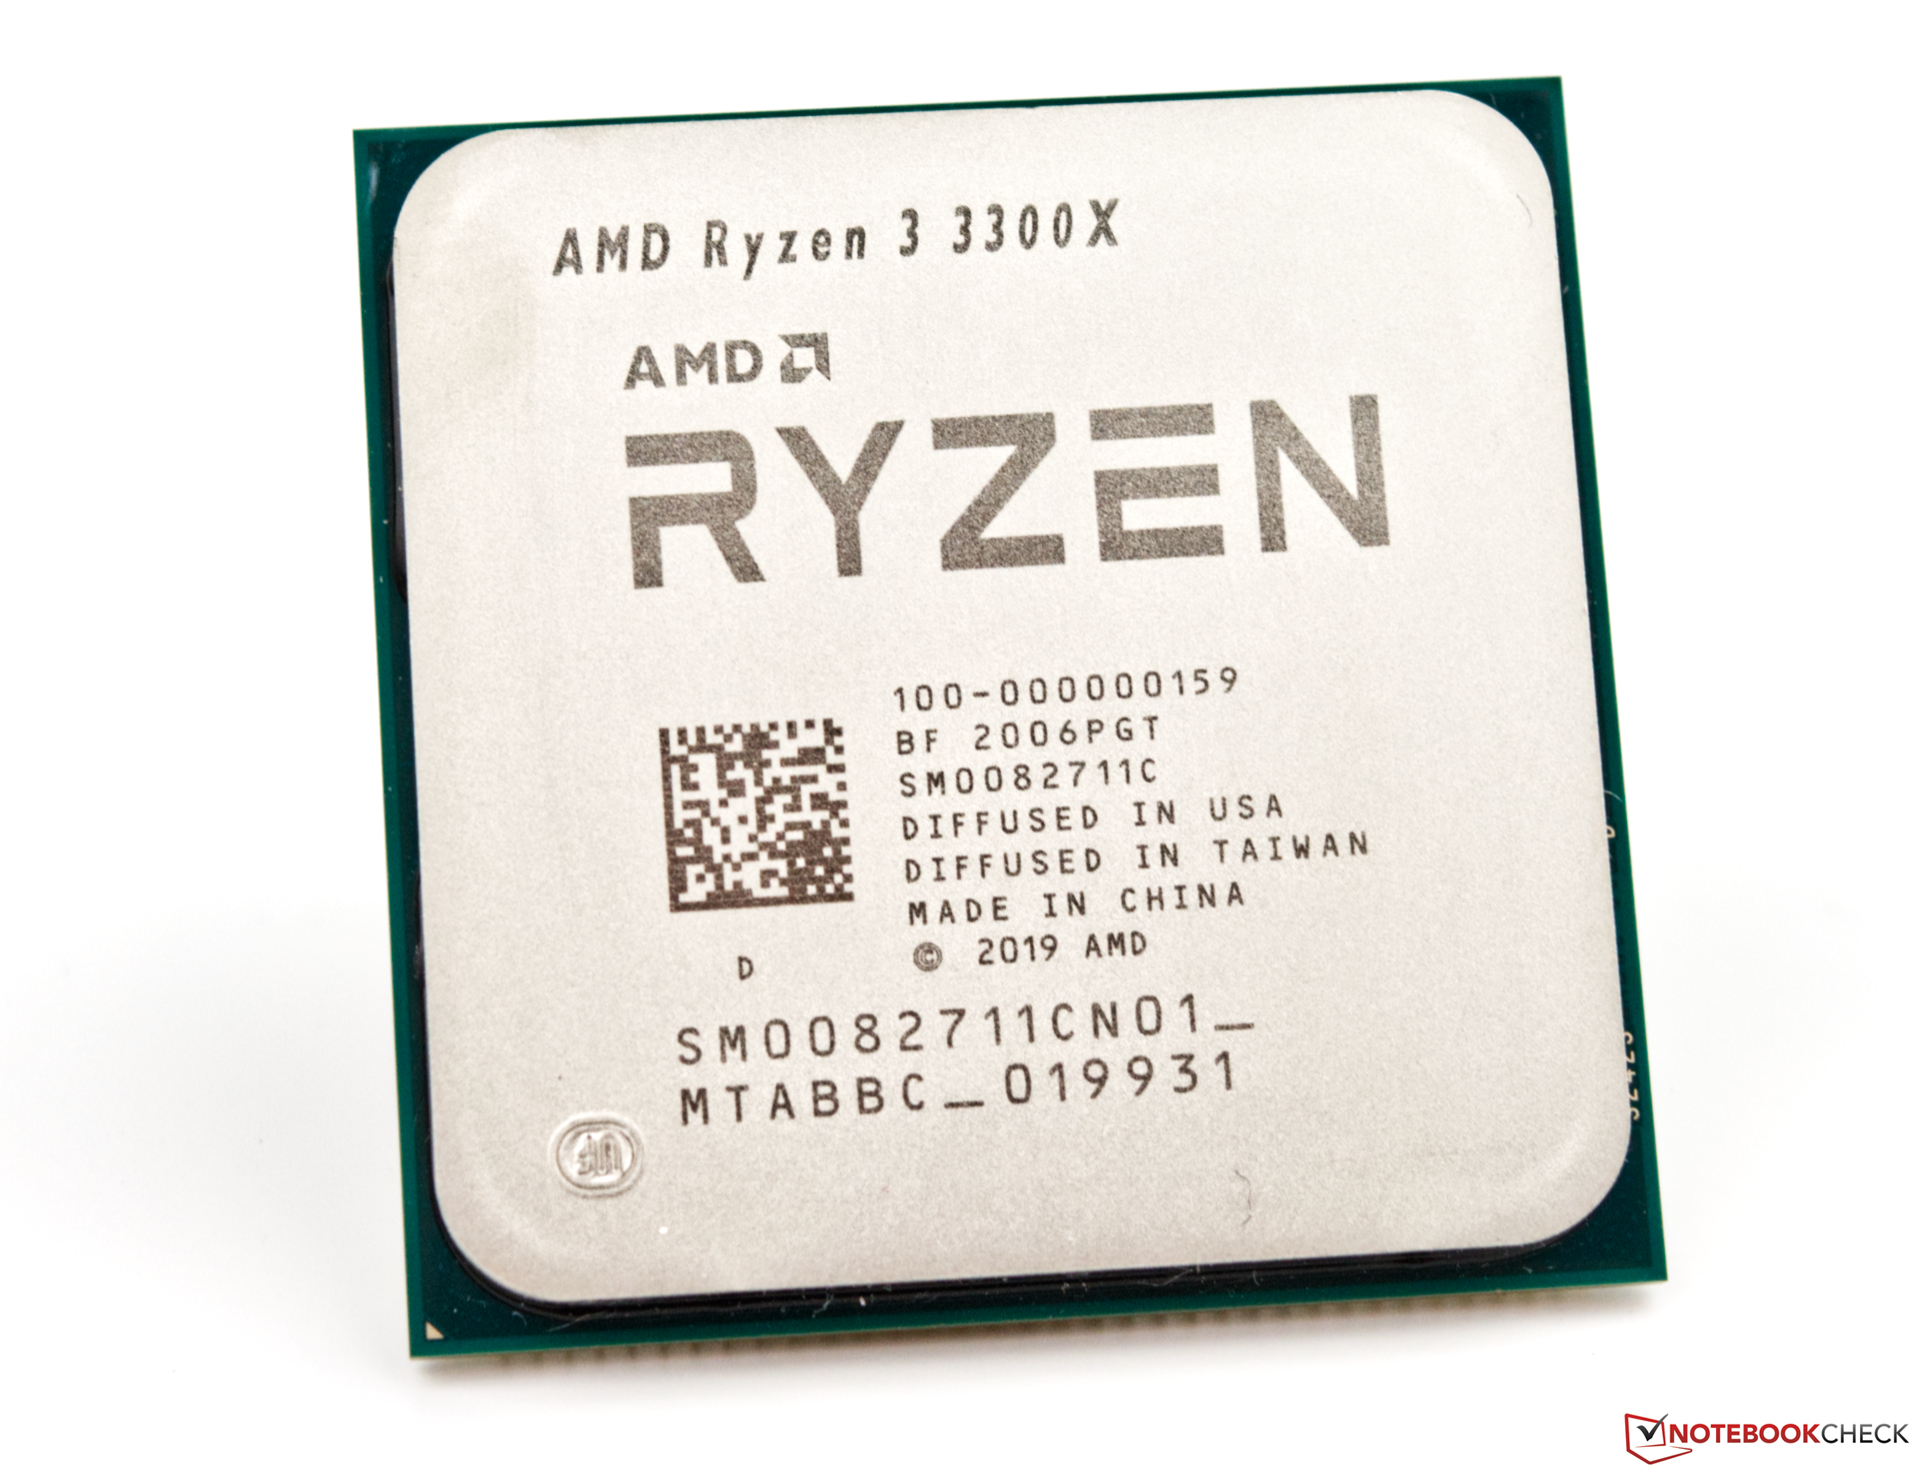 Net zo Afm Stewart Island AMD Ryzen 3 3300X Processor - Benchmarks and Specs - NotebookCheck.net Tech